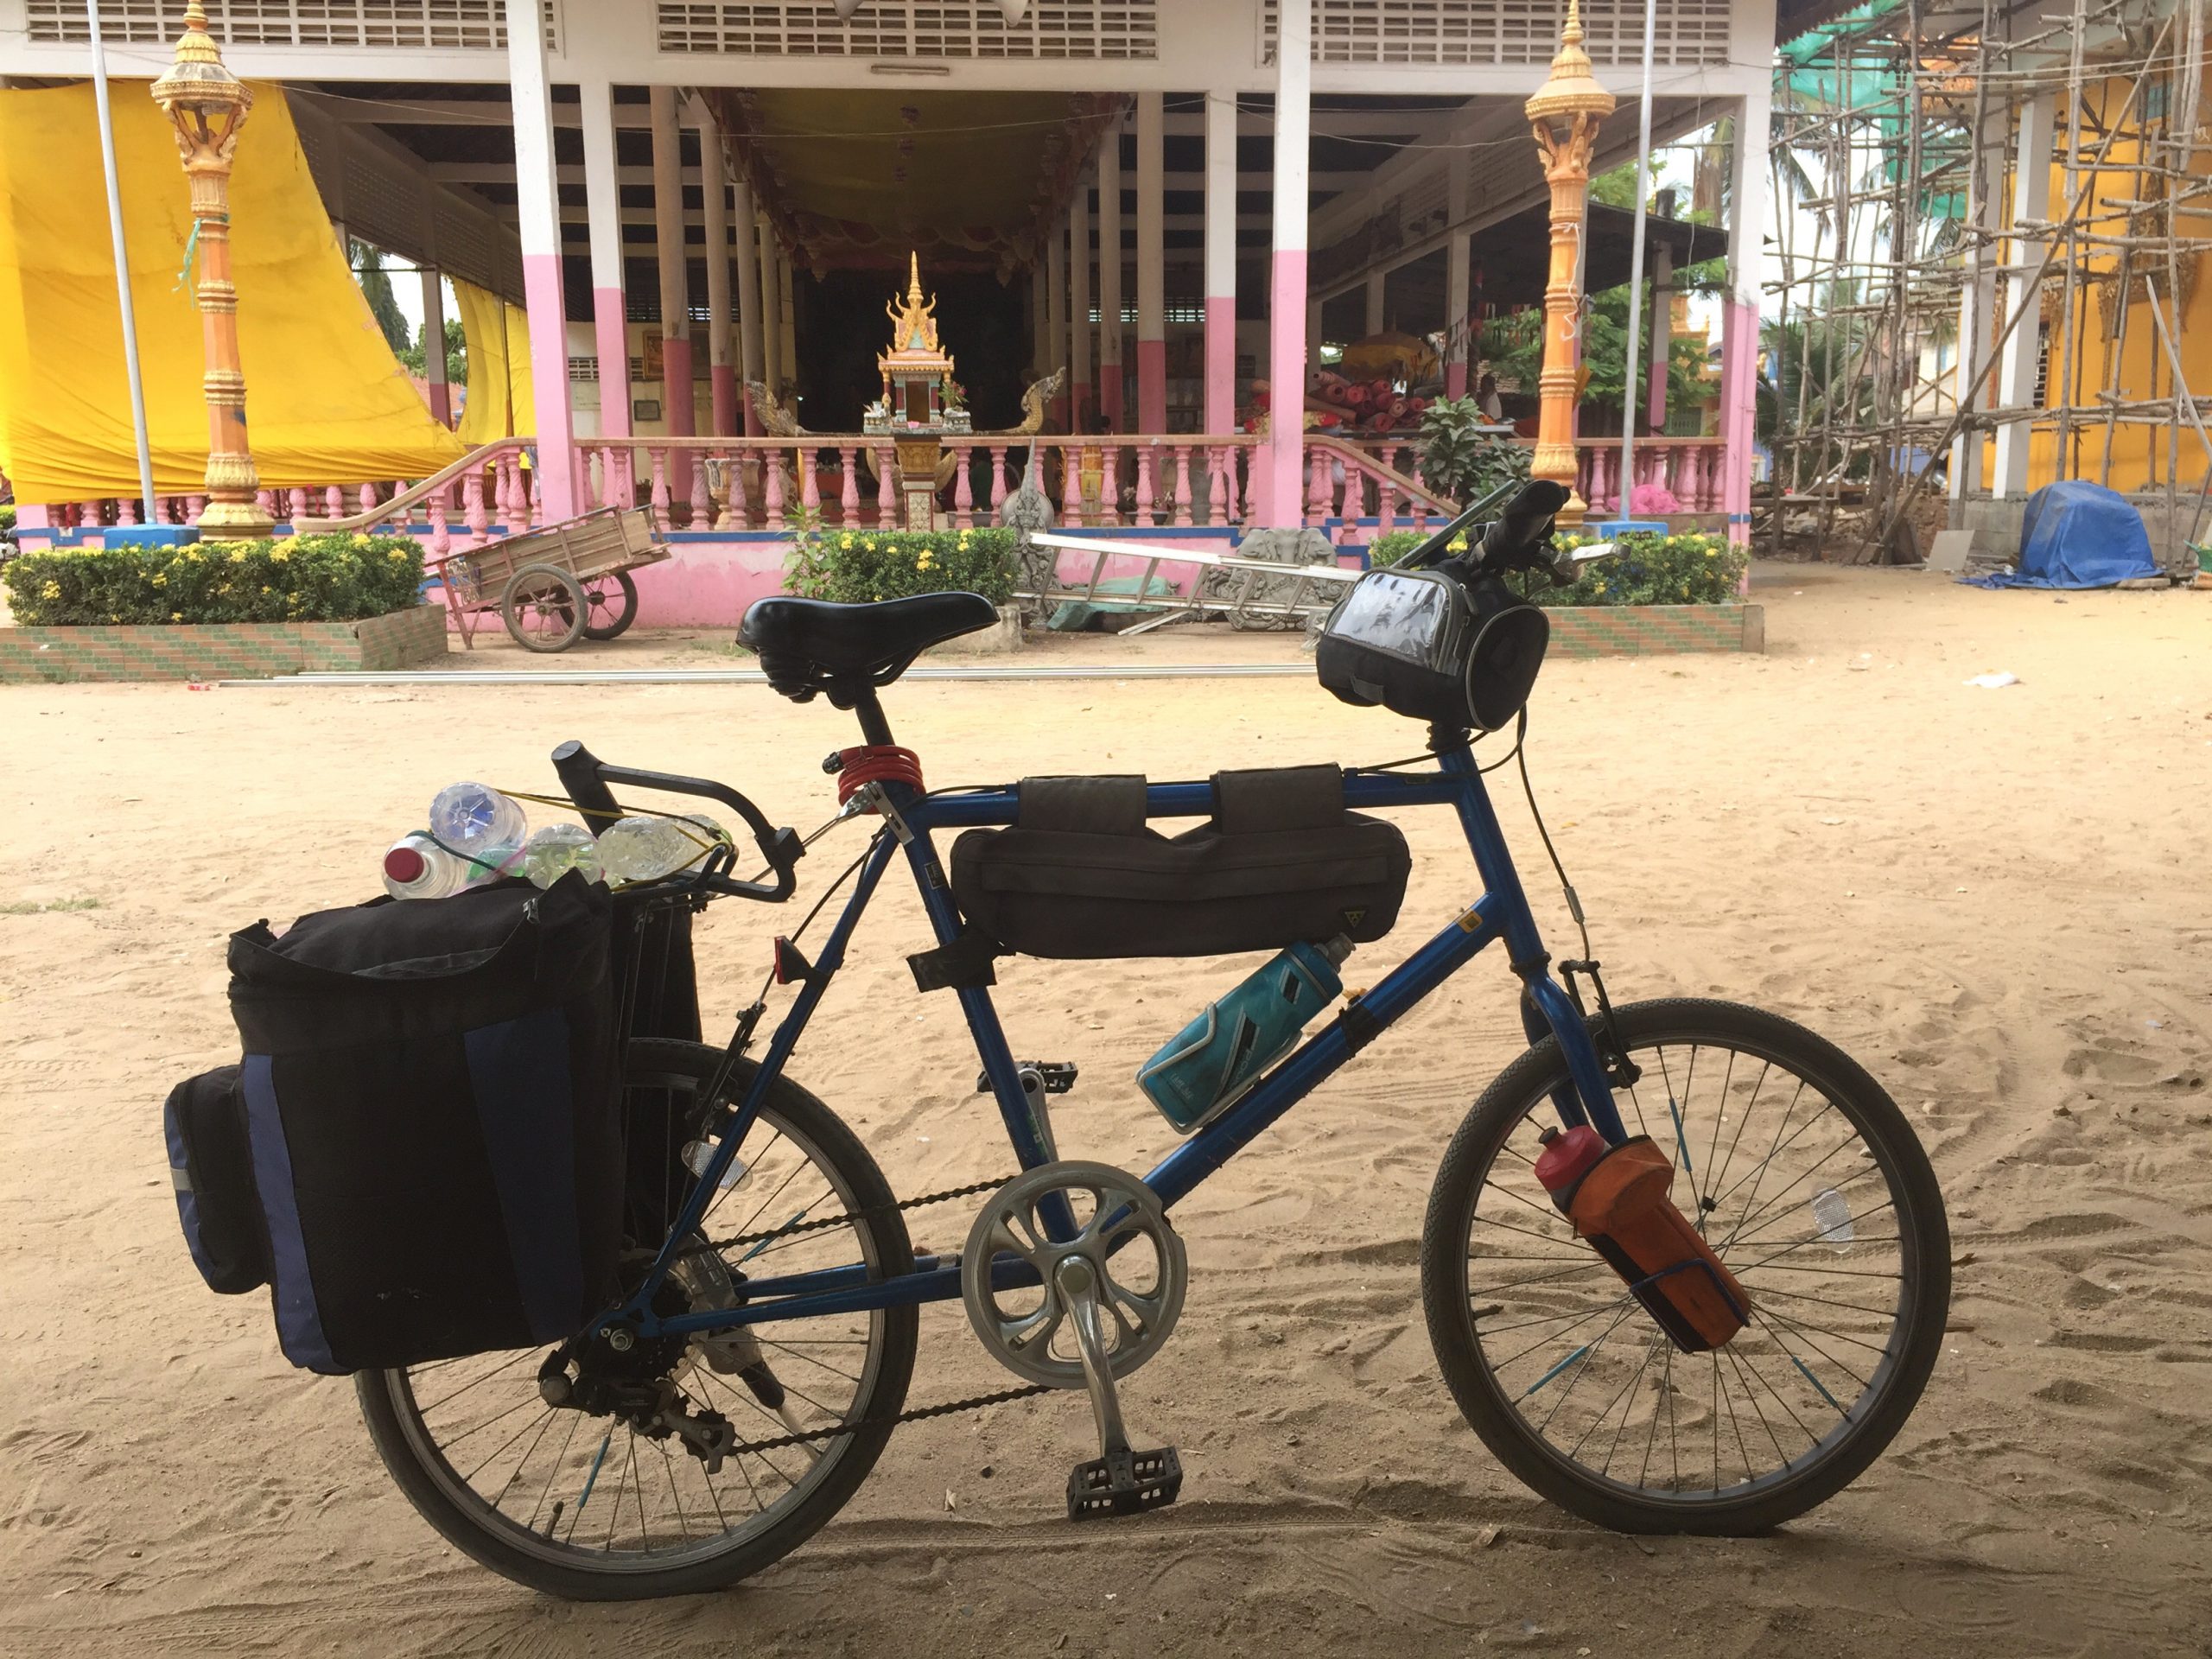 Trip Log 37: Mekong River Valley Adventure Day 5: Neak Loeung to Phnom Penh